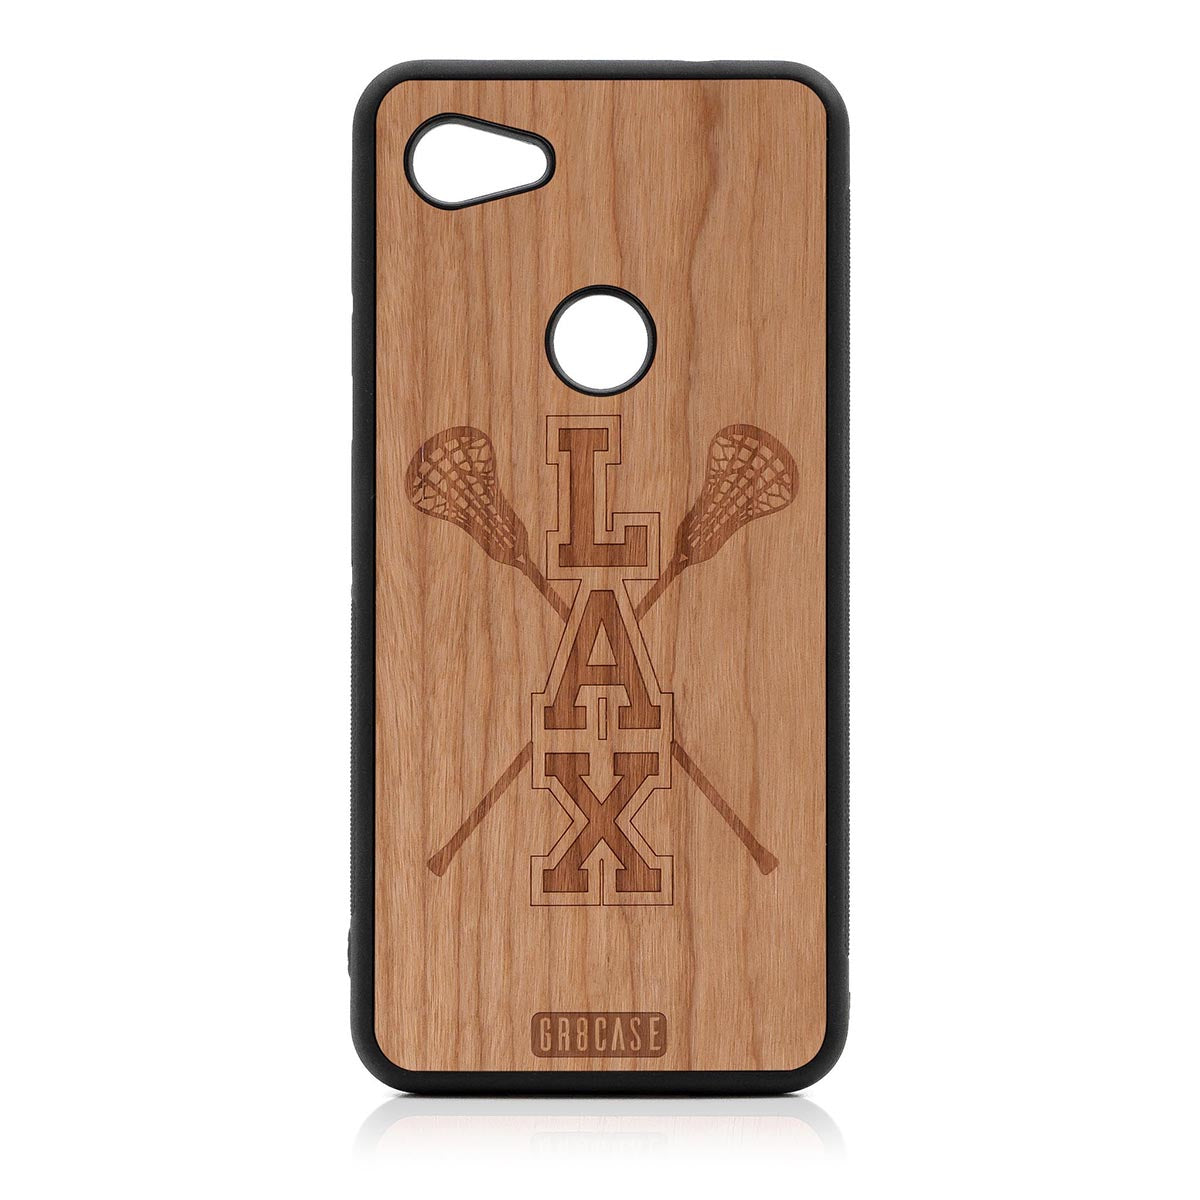 Lacrosse (LAX) Sticks Design Wood Case Google Pixel 3A by GR8CASE